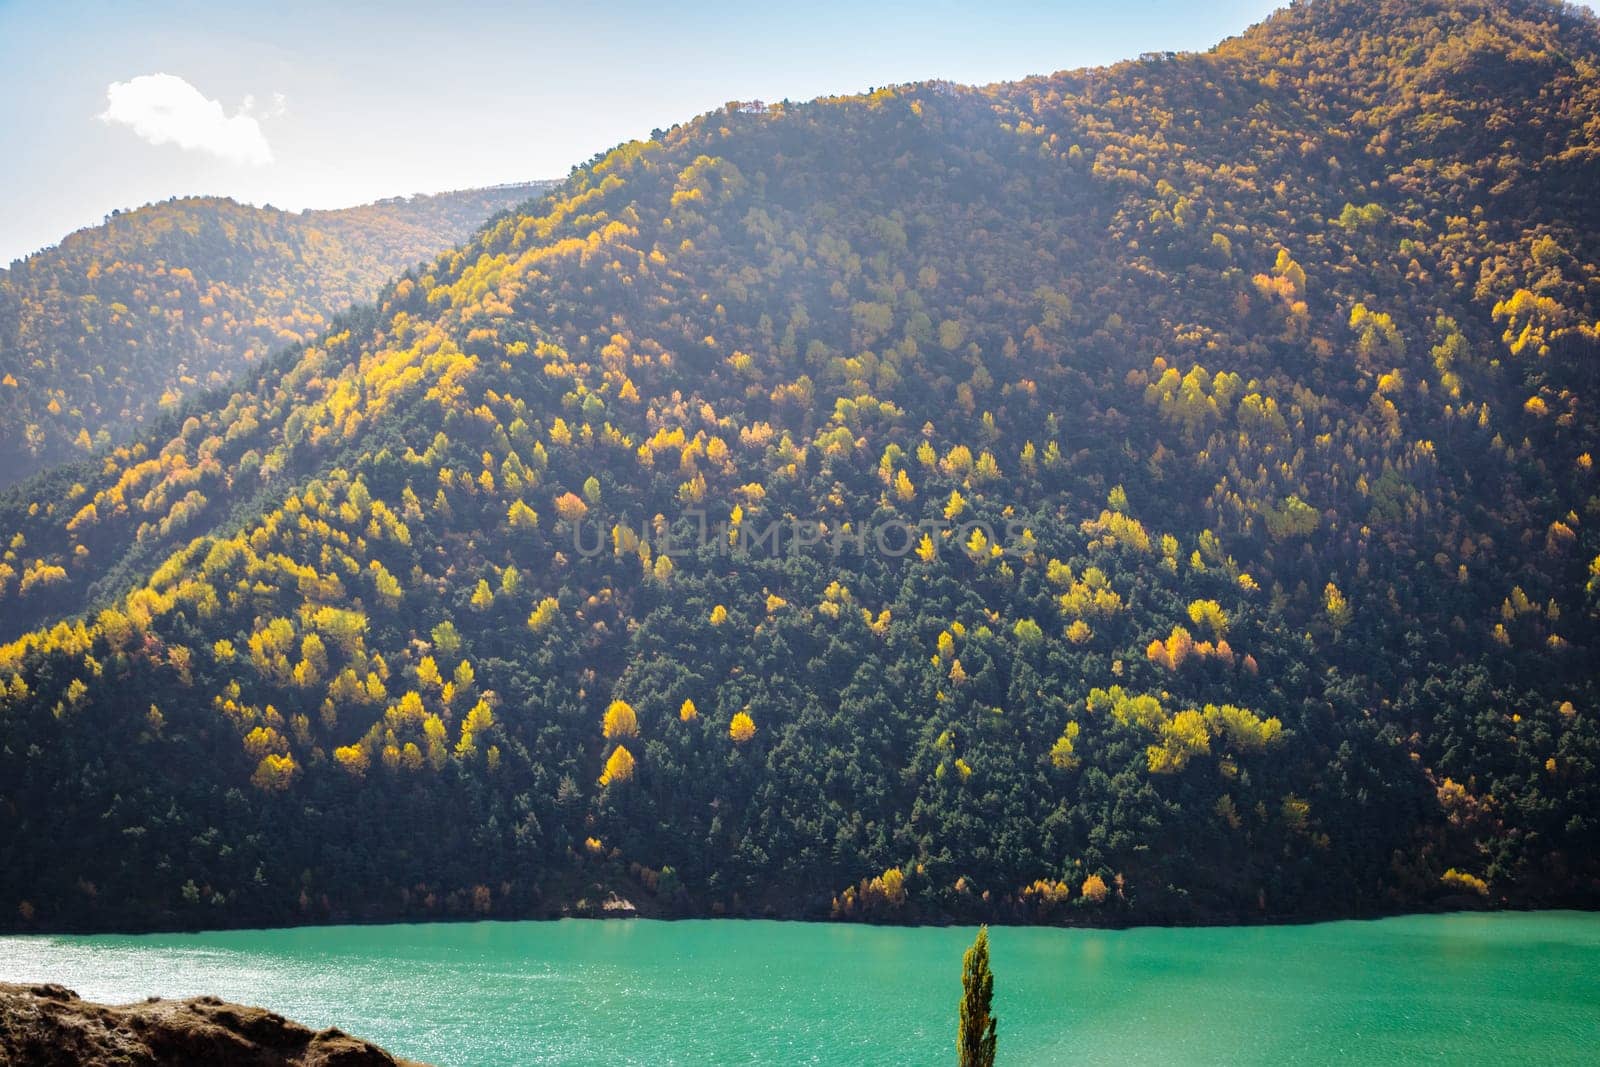 Idyllic Mountain Scenery with a Beautiful Blue Reservoir and Abundant Greenery by Yurich32